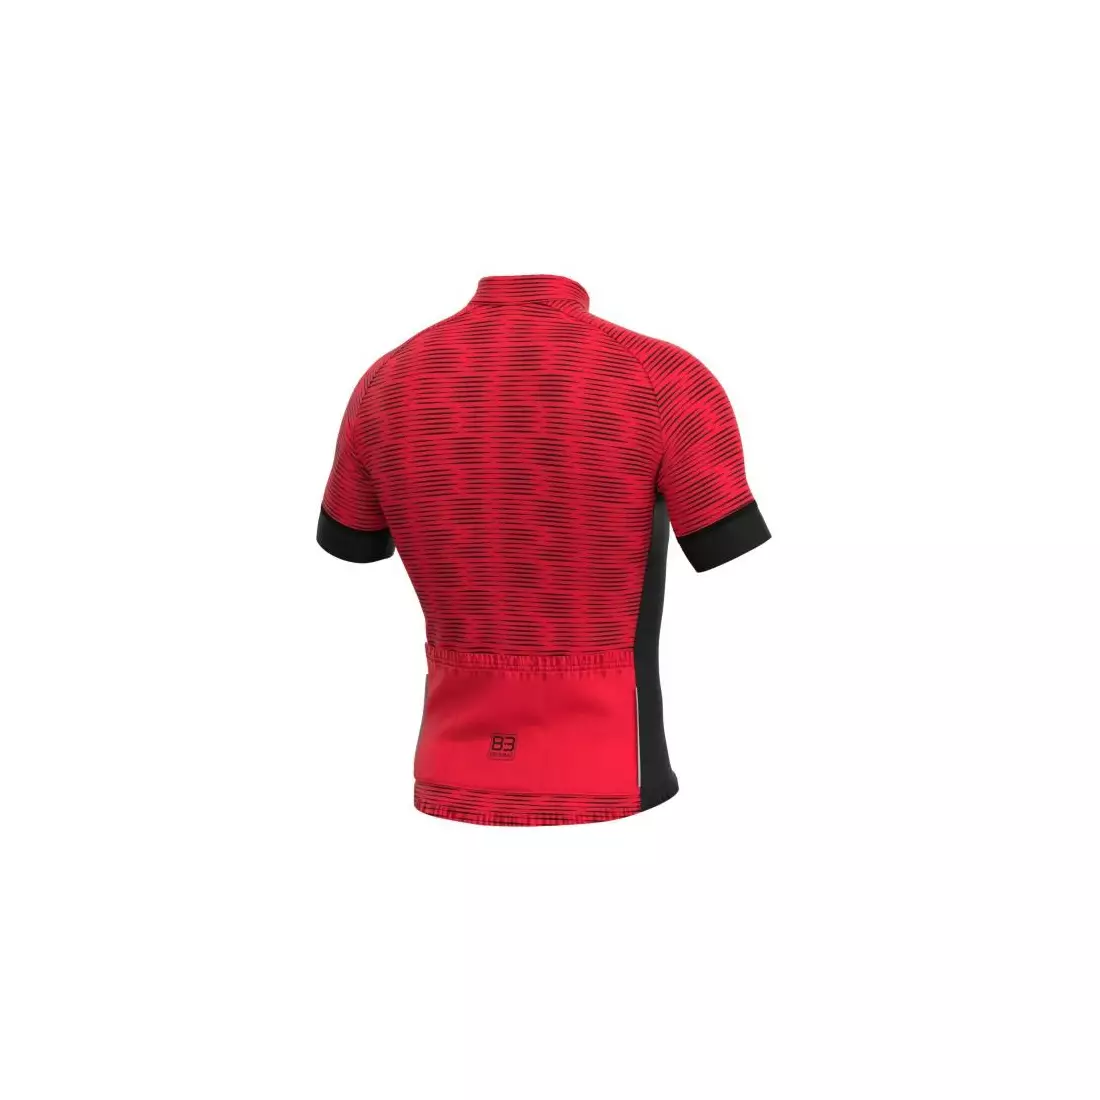 Biemme men's cycling jersey CIPRESS red-black